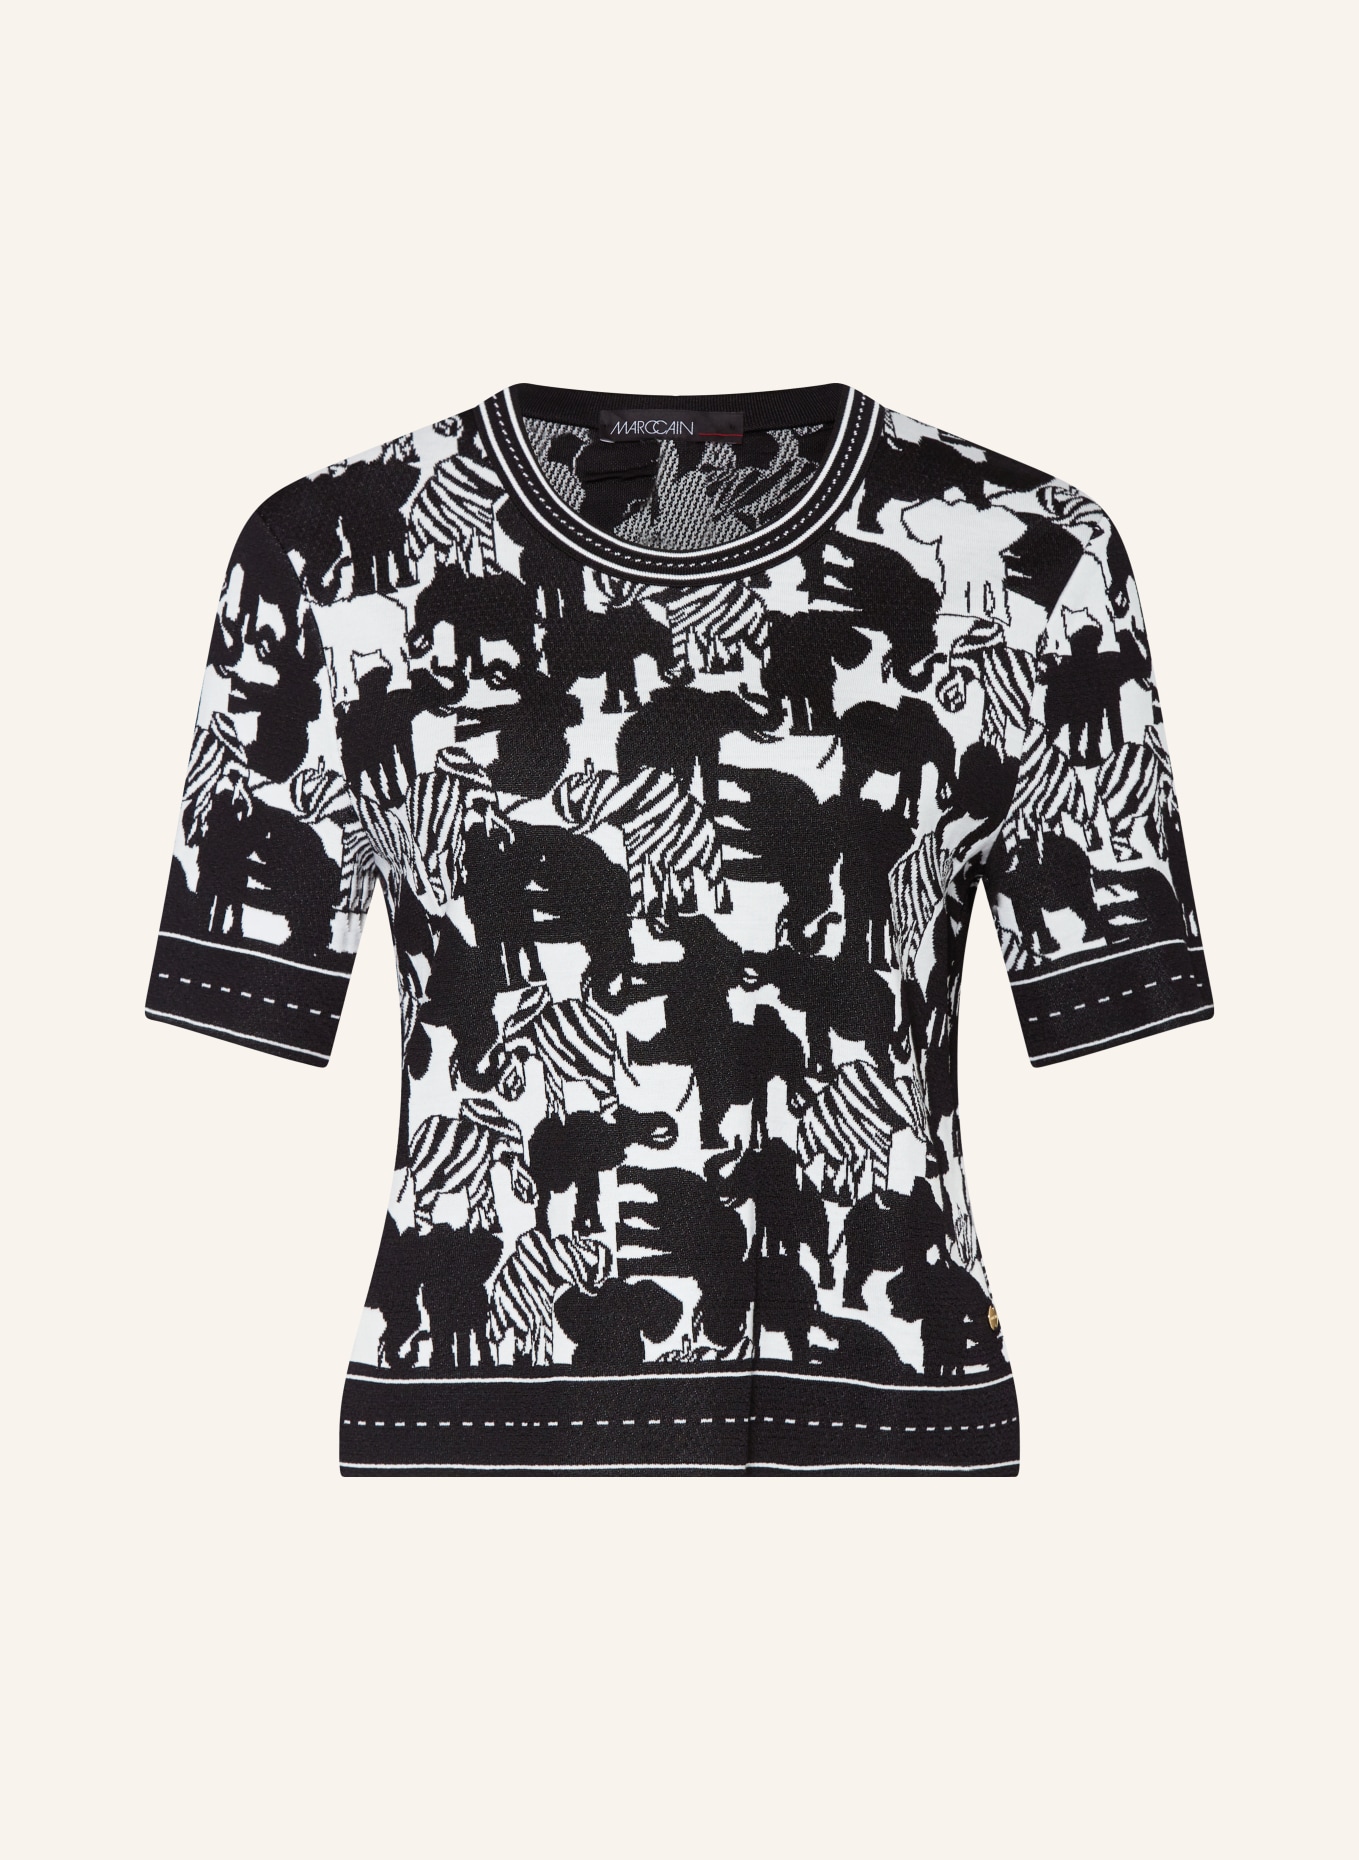 MARC CAIN Strickshirt, Farbe: 190 white and black (Bild 1)